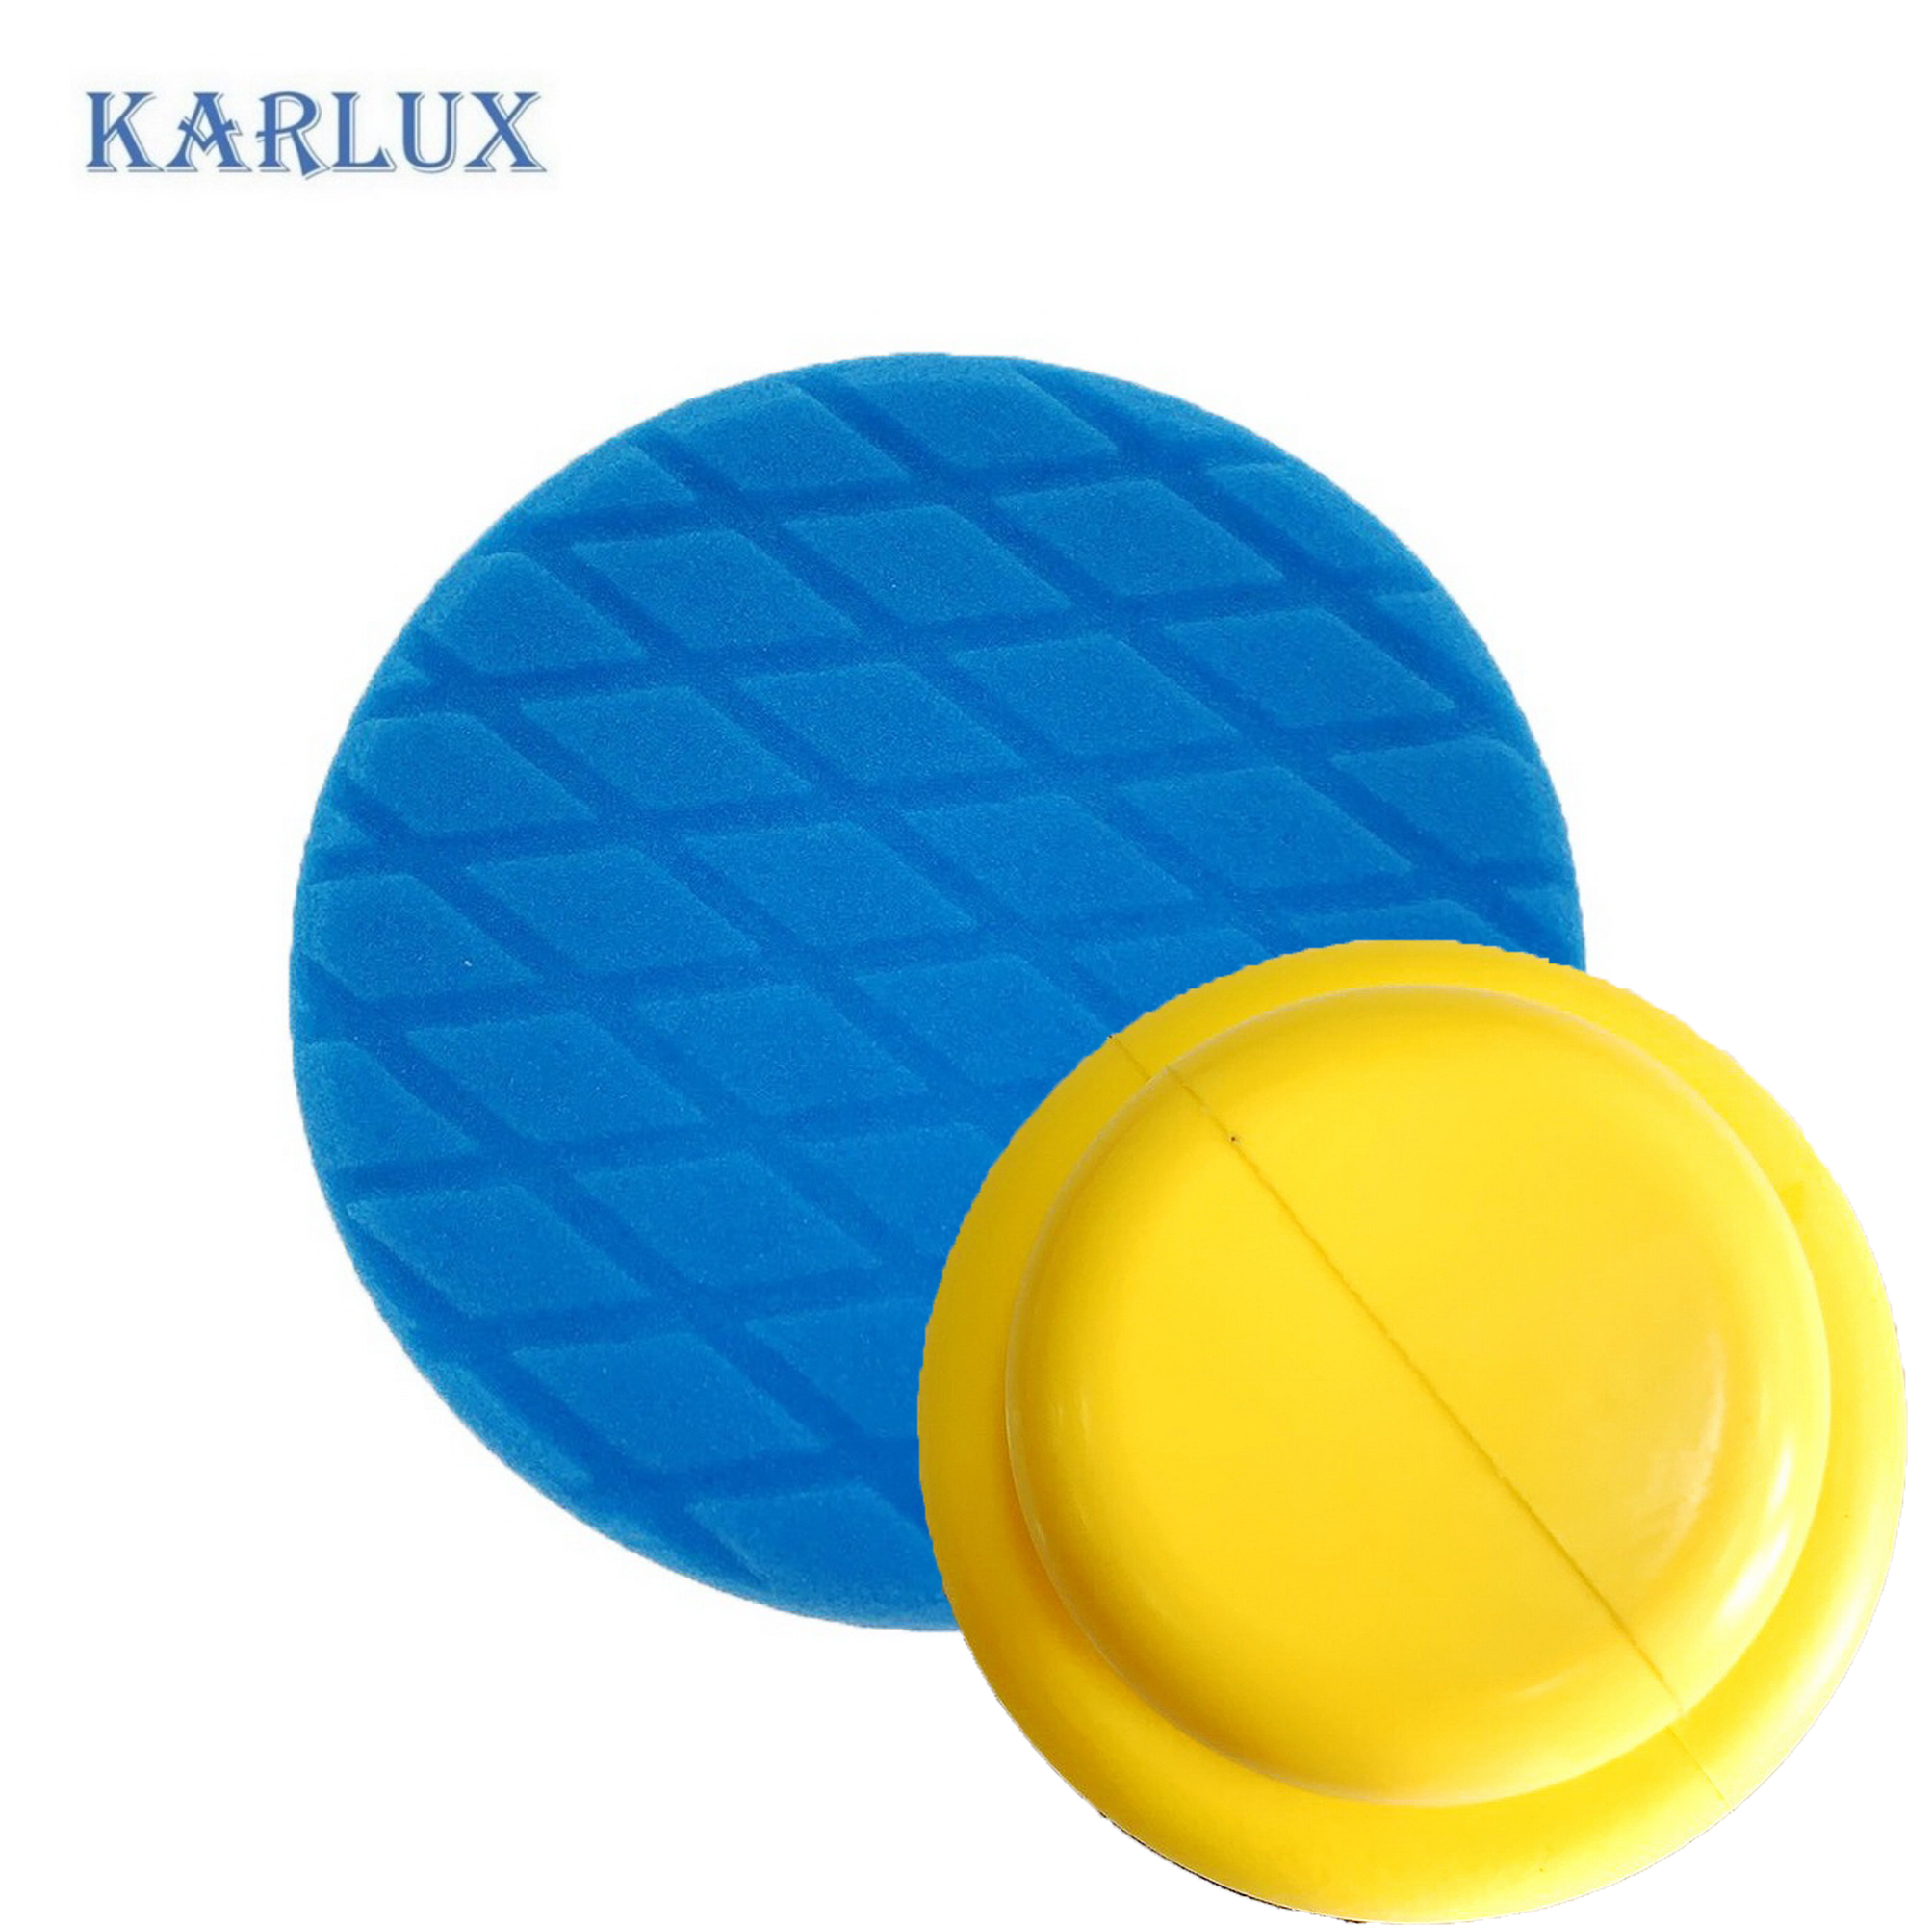 Karlux แป้นมือจับ ฟองน้ำขัดสีรถ 6นิ้ว สีฟ้า Blue Diamond Cross Cutting/Buffing Foam 6inch (สำหรับแป้นจับ 5นิ้ว เพื่อเว้นขอบ)